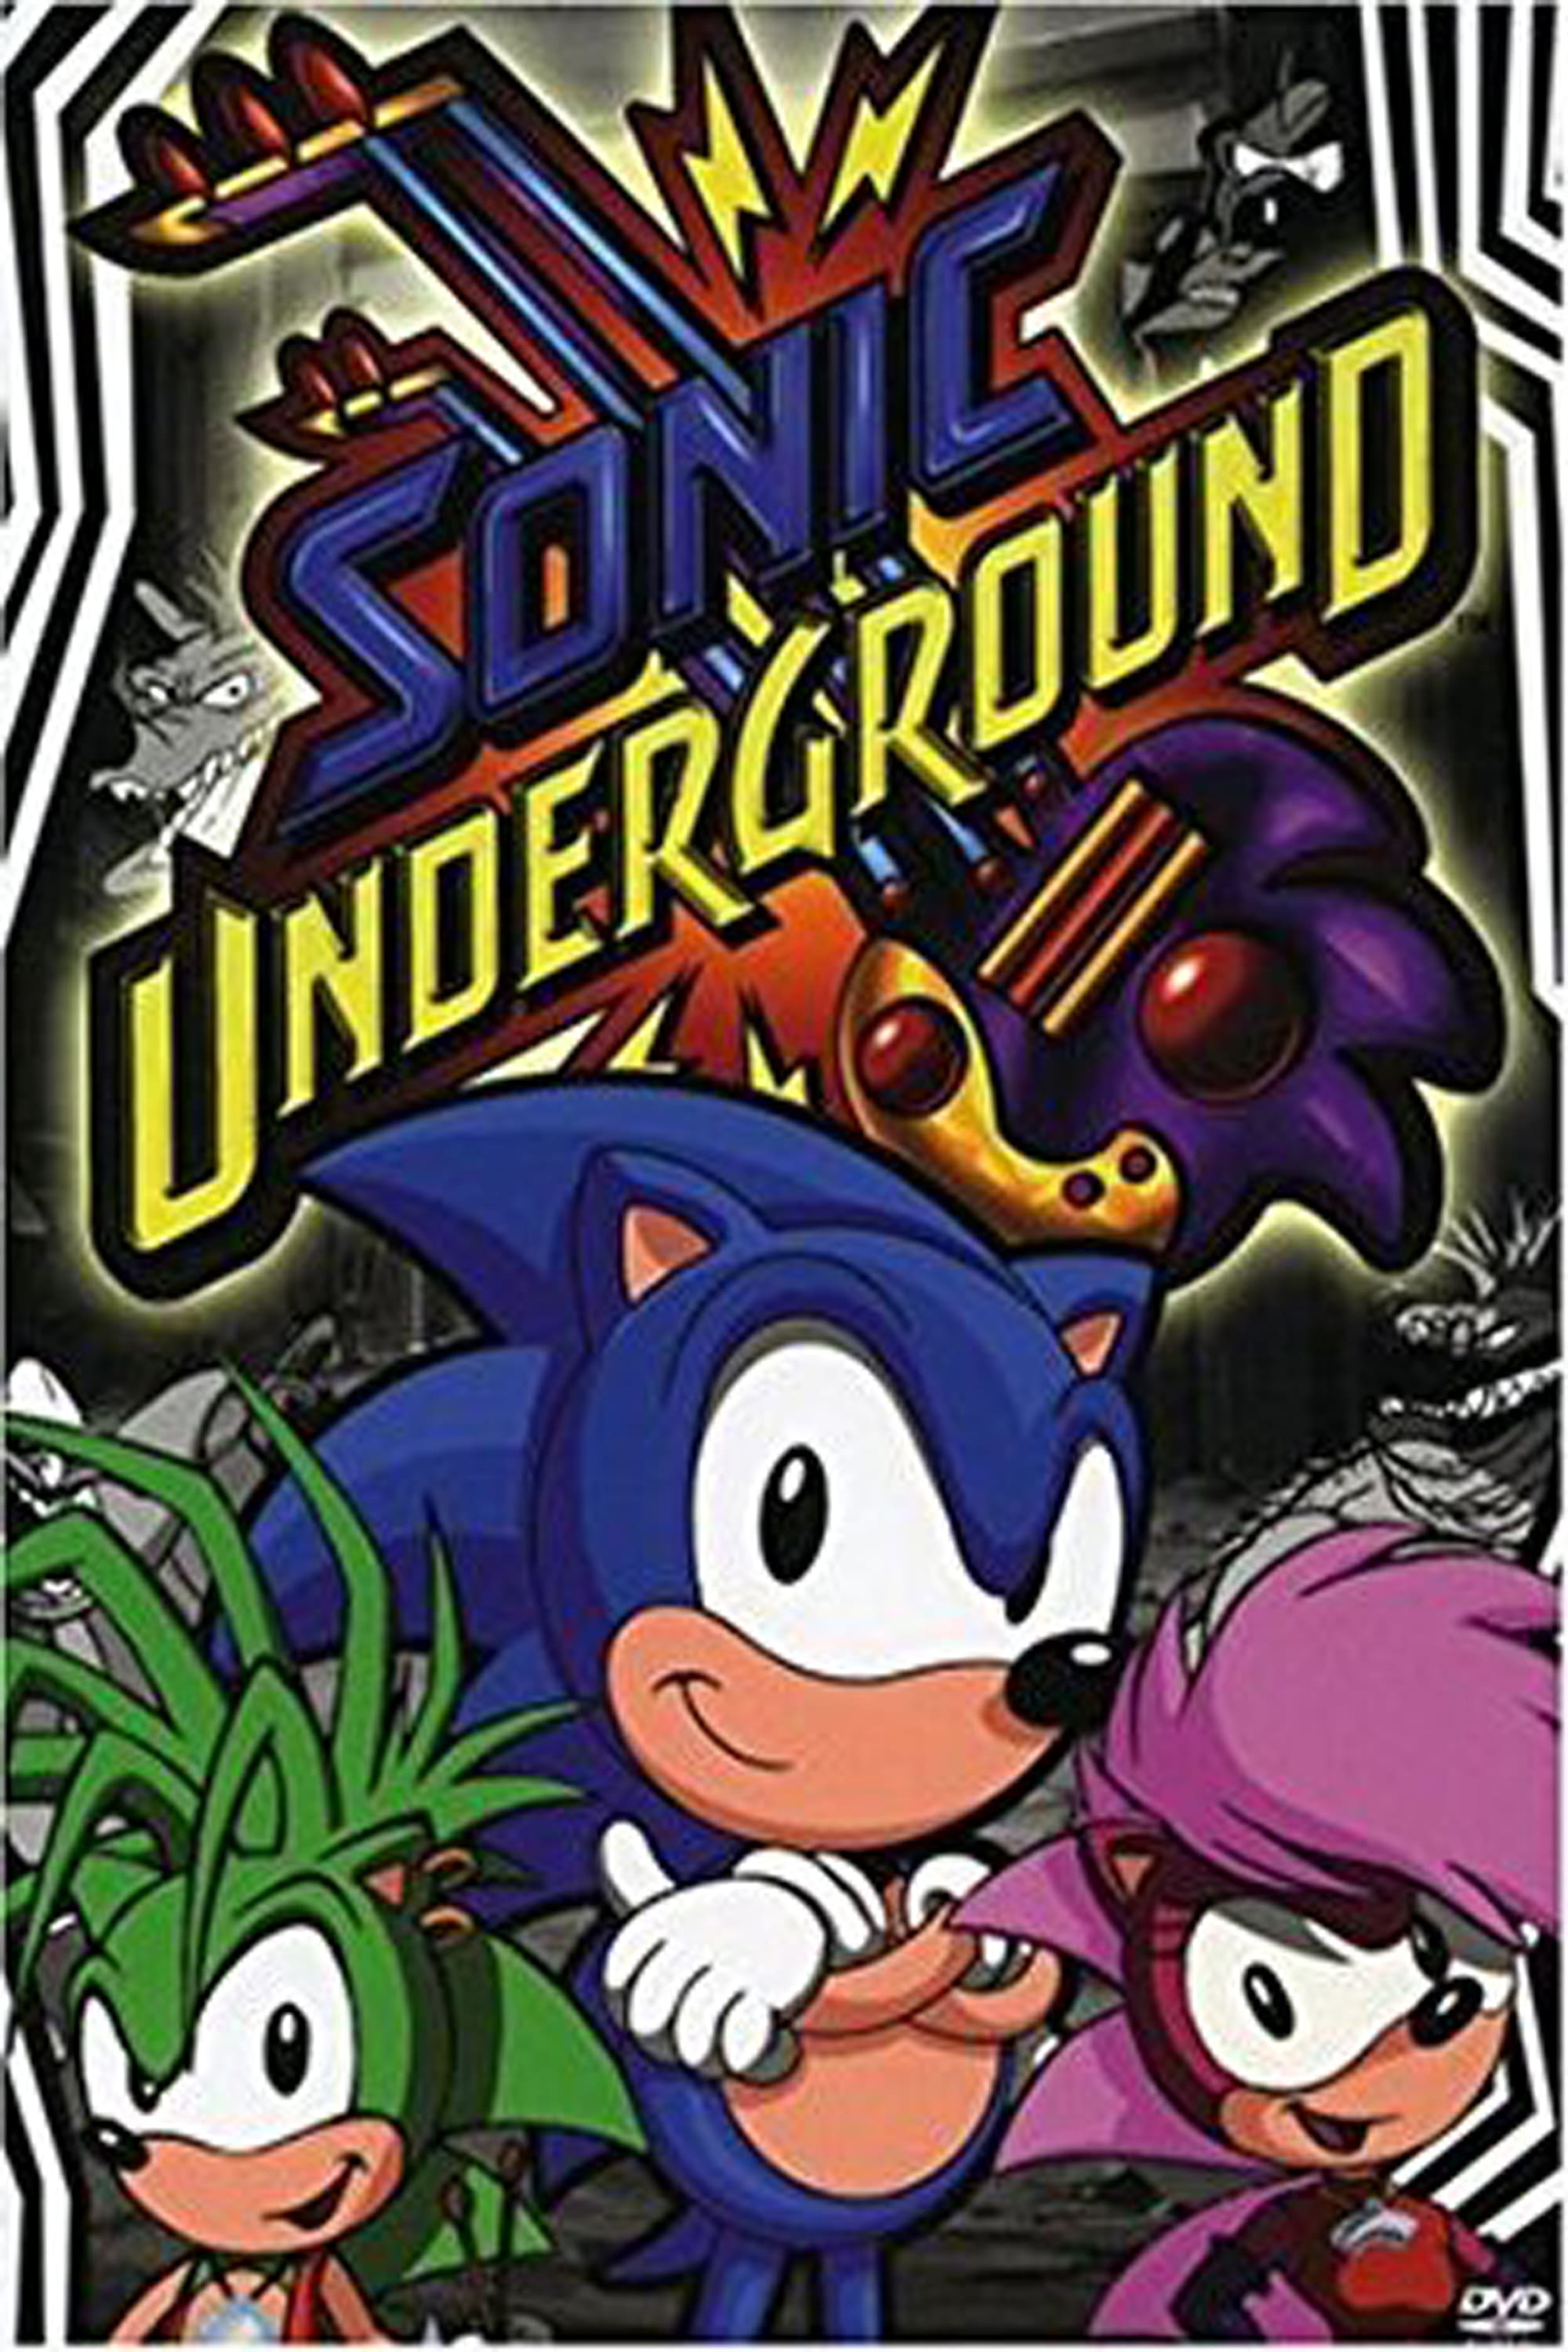 Sonic Underground Picture